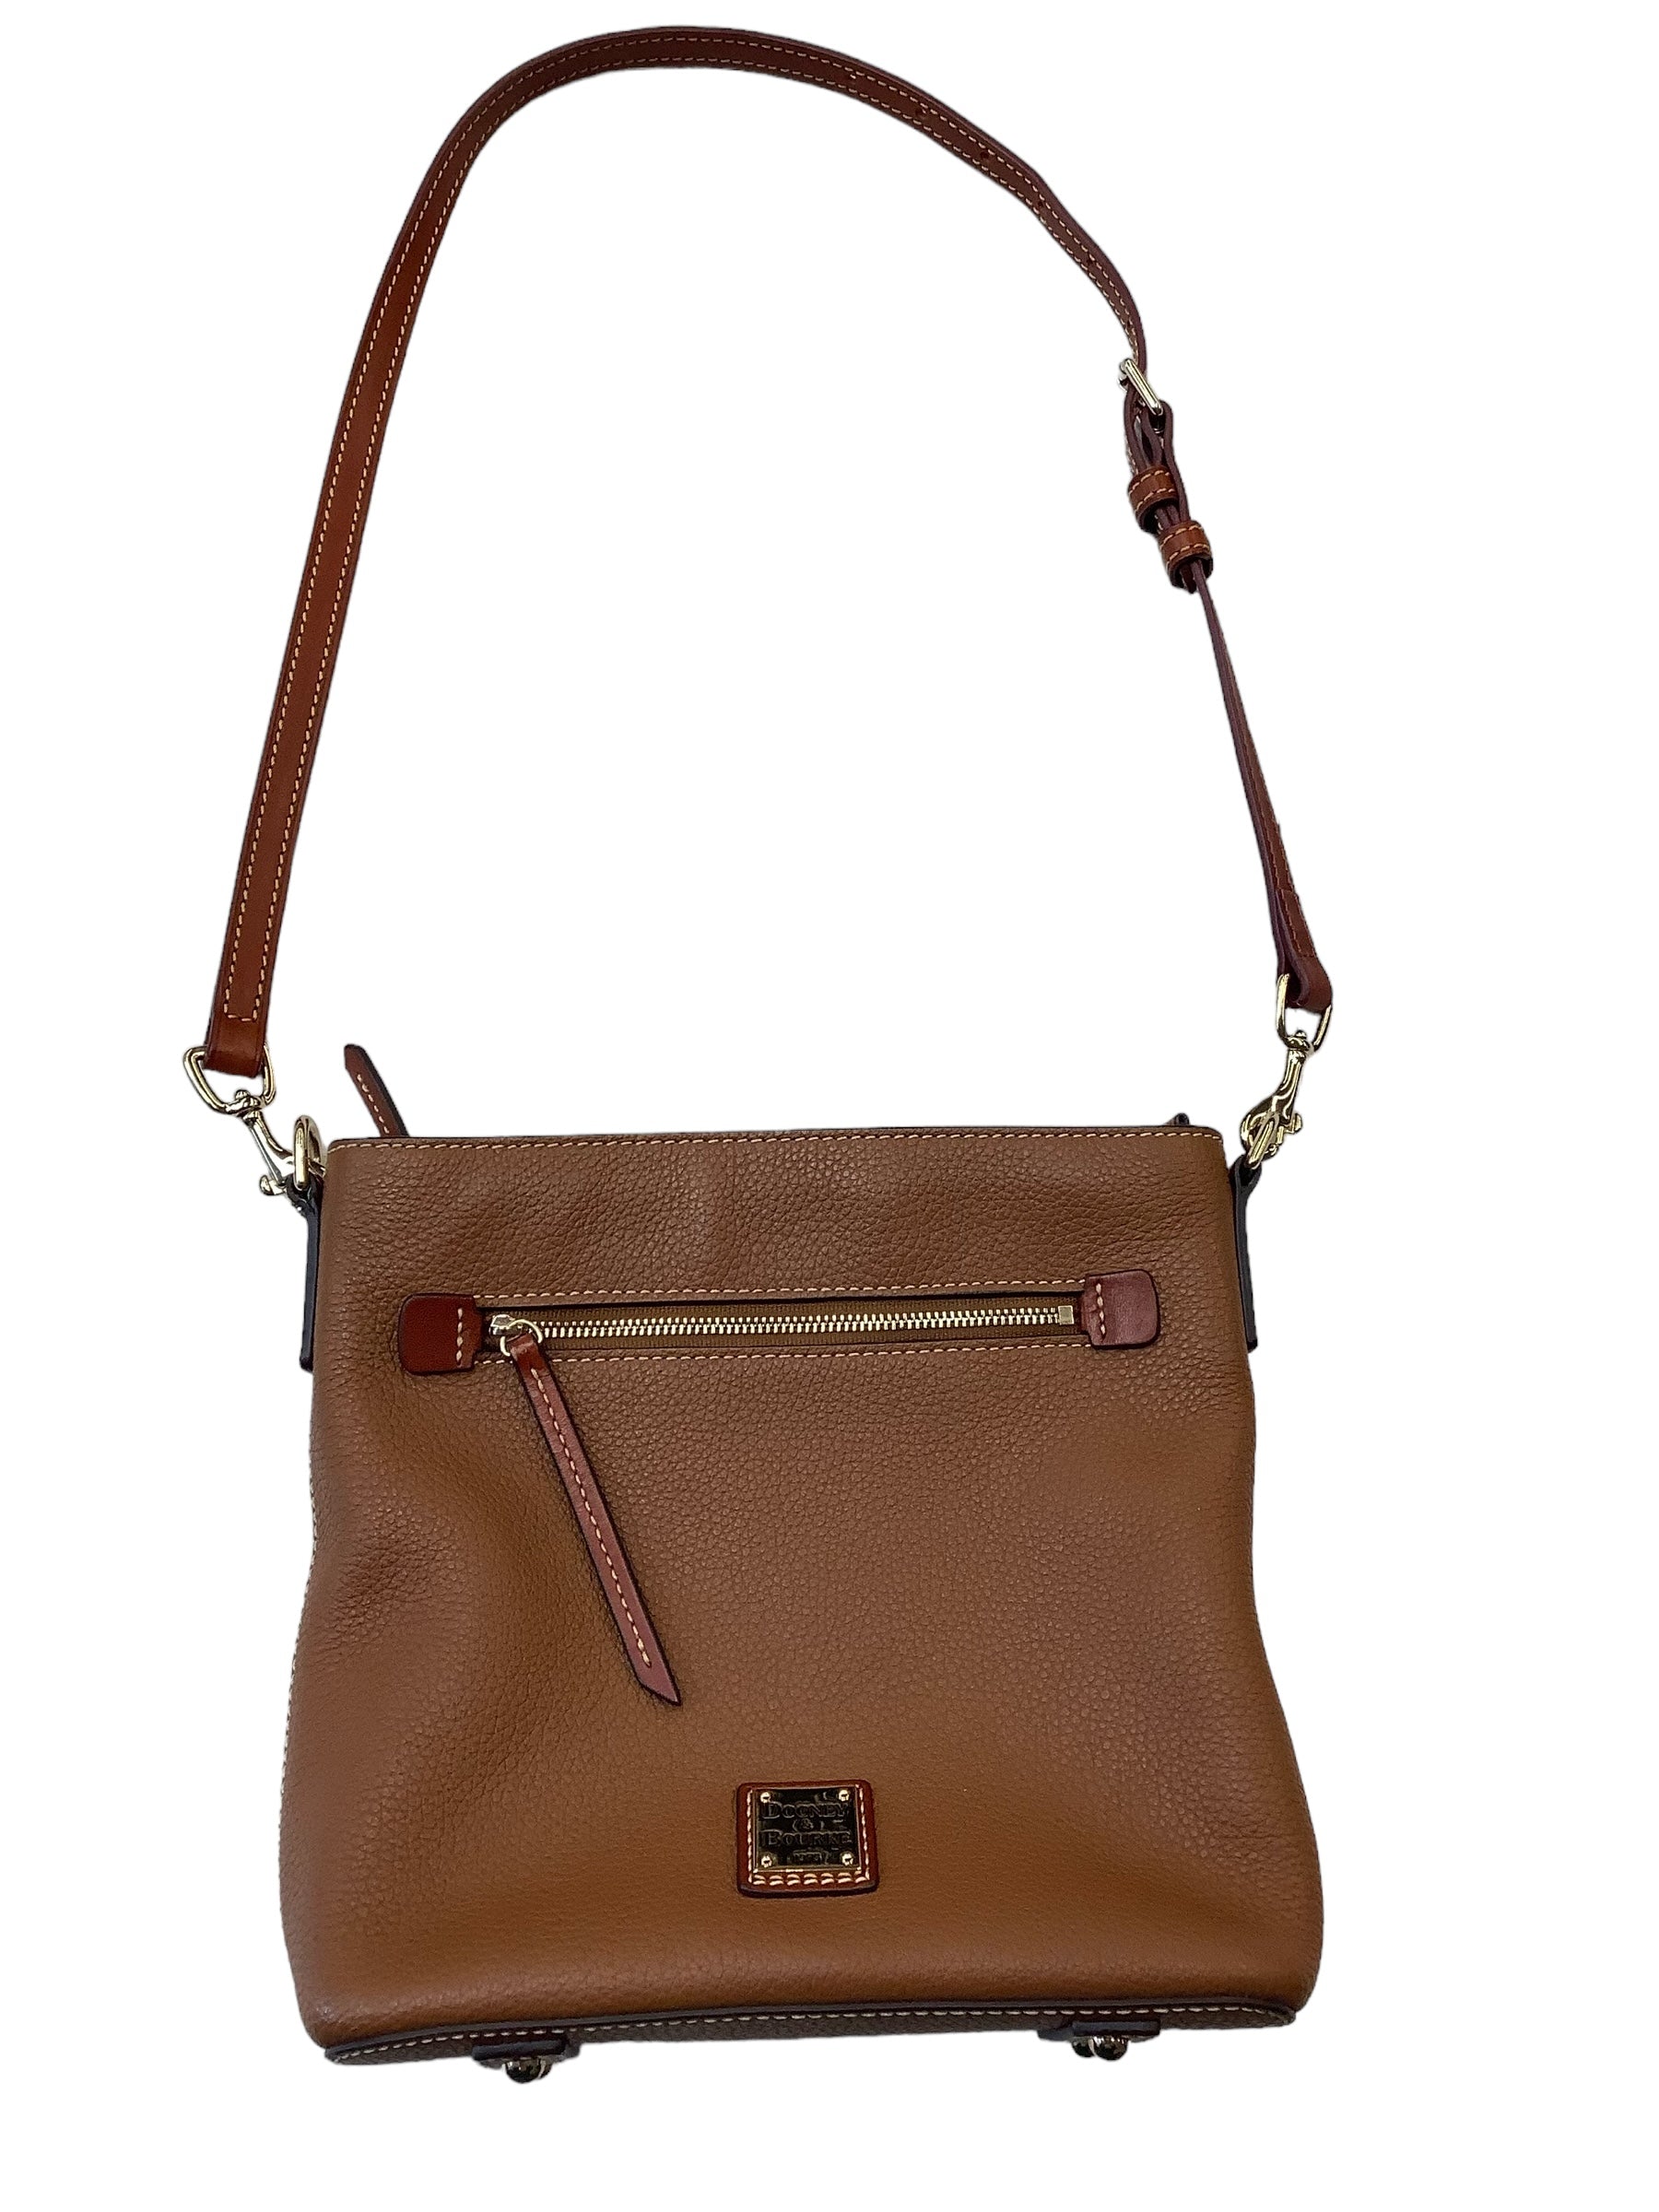 Buy Cathy London Women's Handbag(Blue,Cathy-10) at Amazon.in